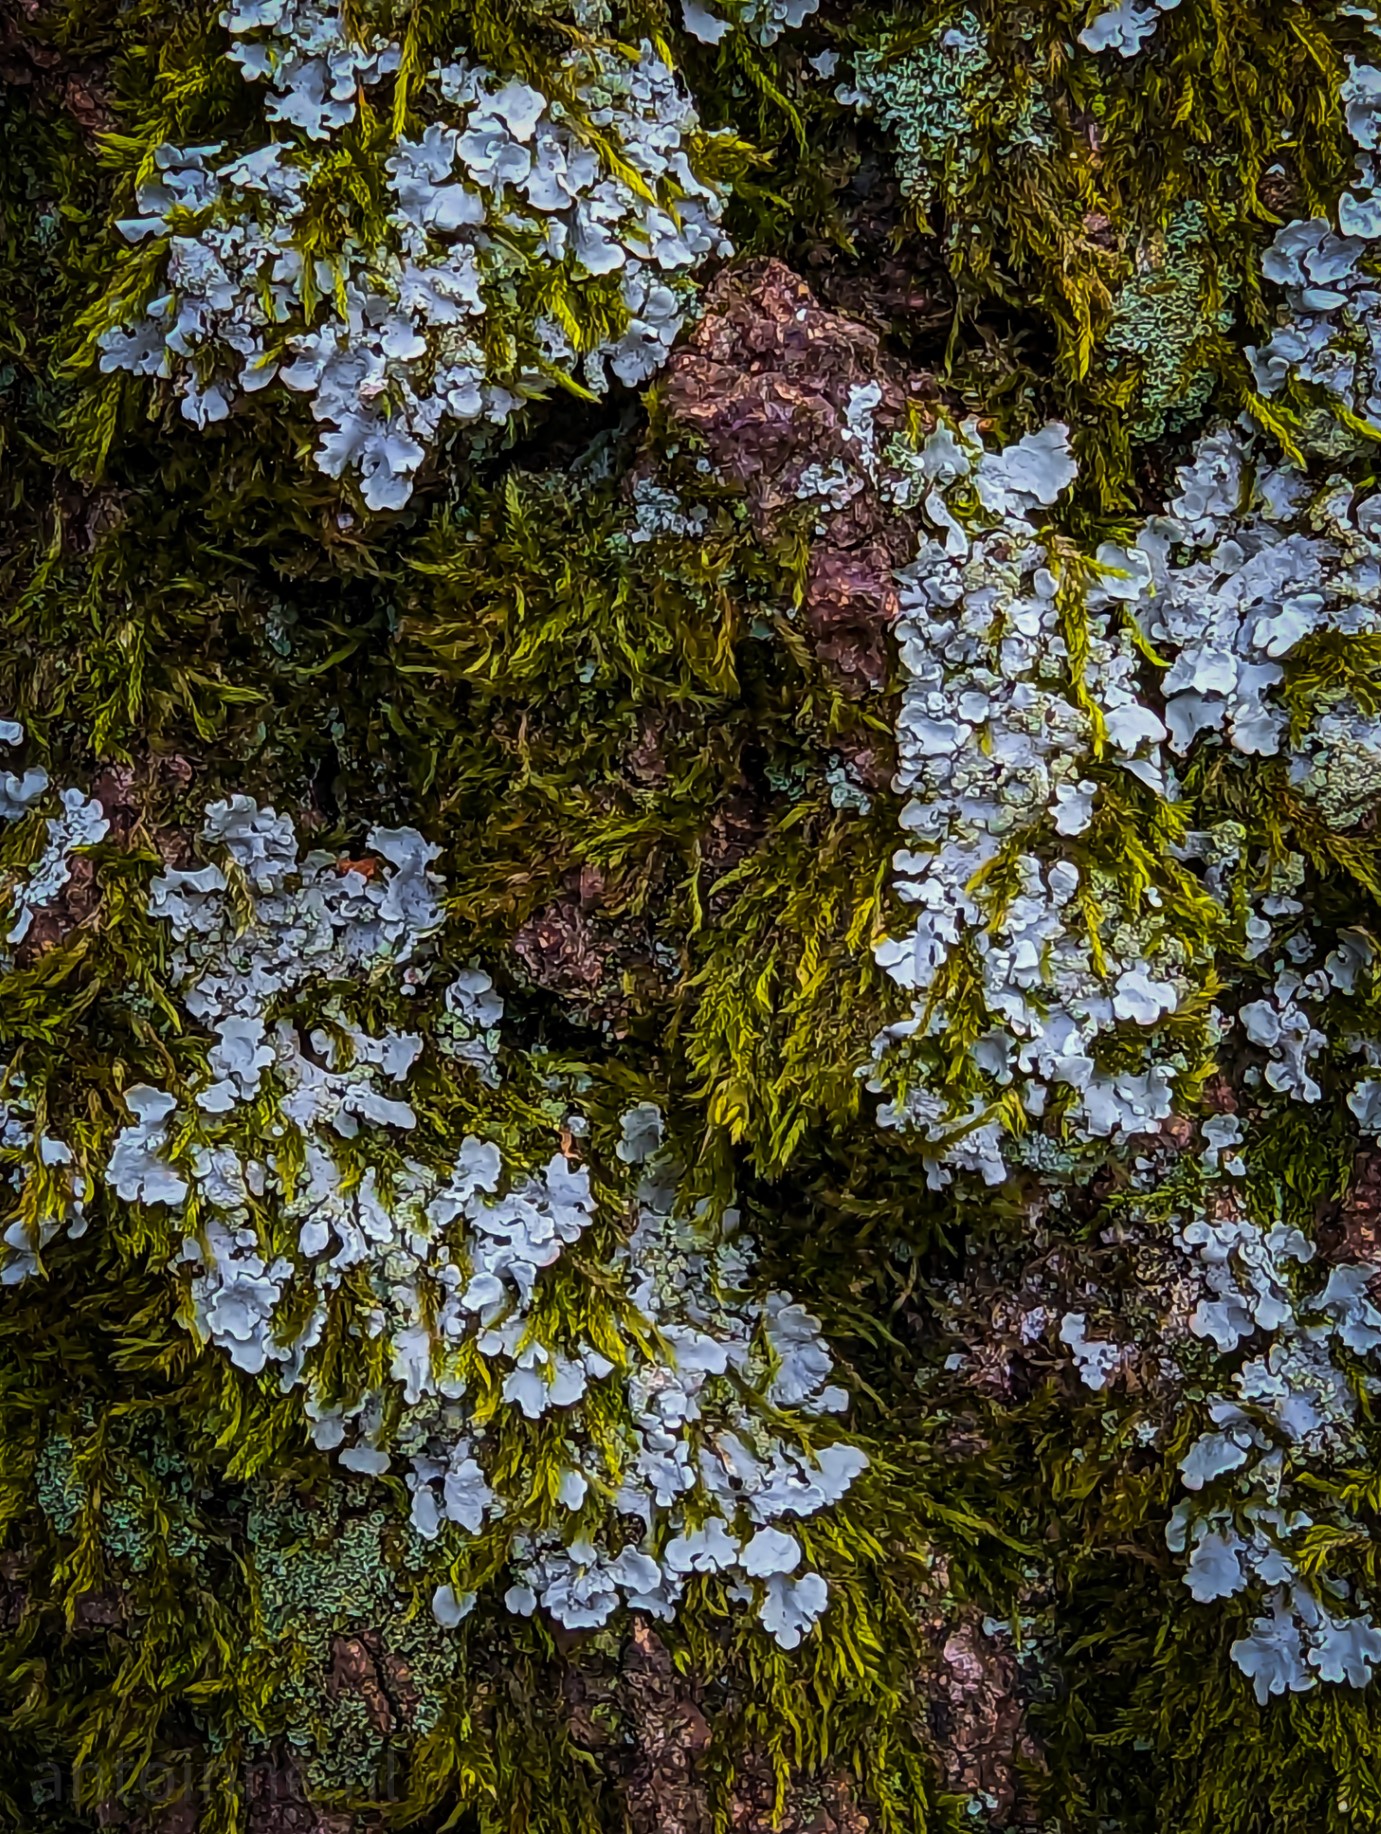 A close-up shot of lichen on tree bark.